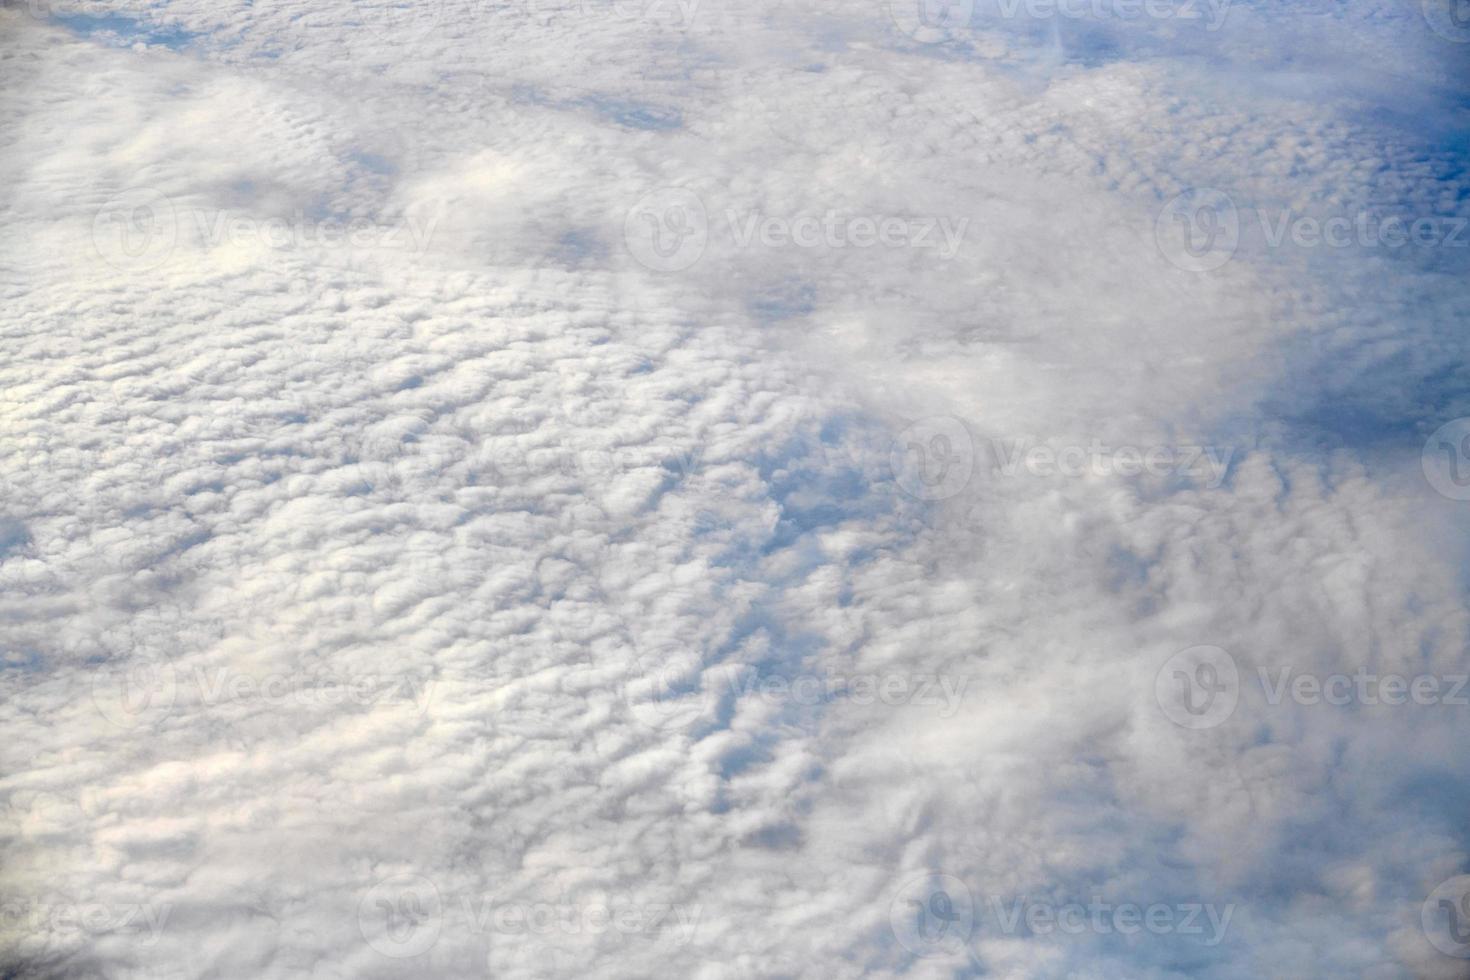 adembenemend over- wolken visie van vliegtuig venster, dik wit blauw wolken looks Leuk vinden zacht schuim foto